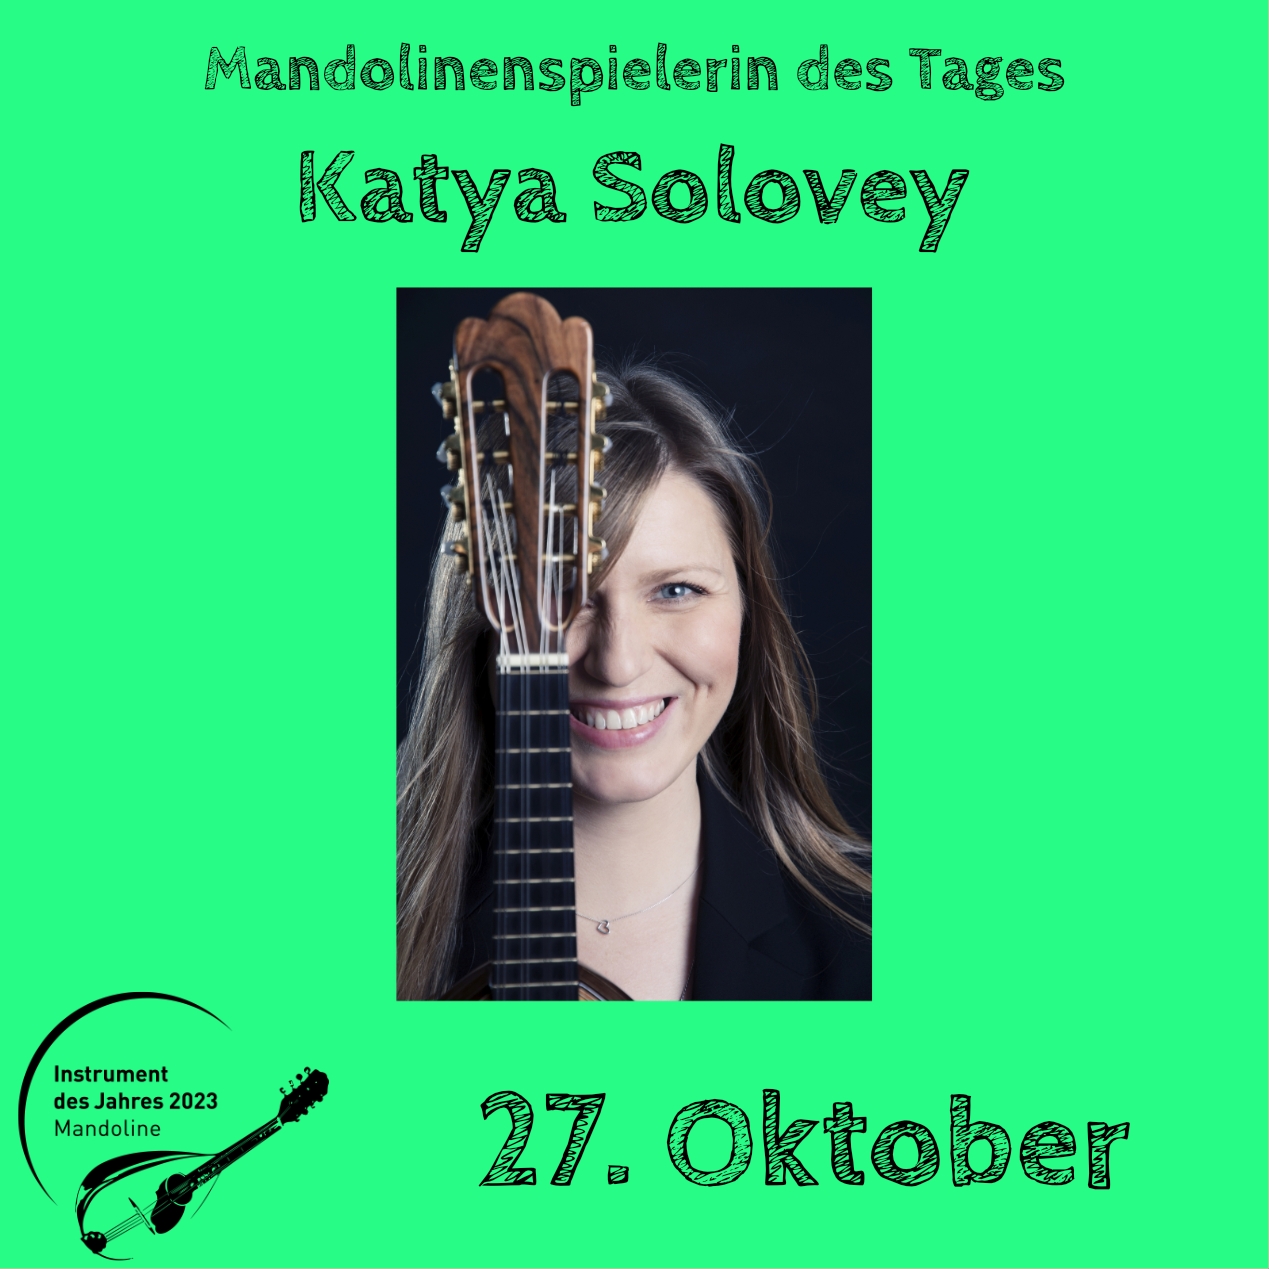 27. Oktober - Katya Solovey Instrument des Jahres 2023 Mandolinenspieler Mandolinenspielerin des Tages